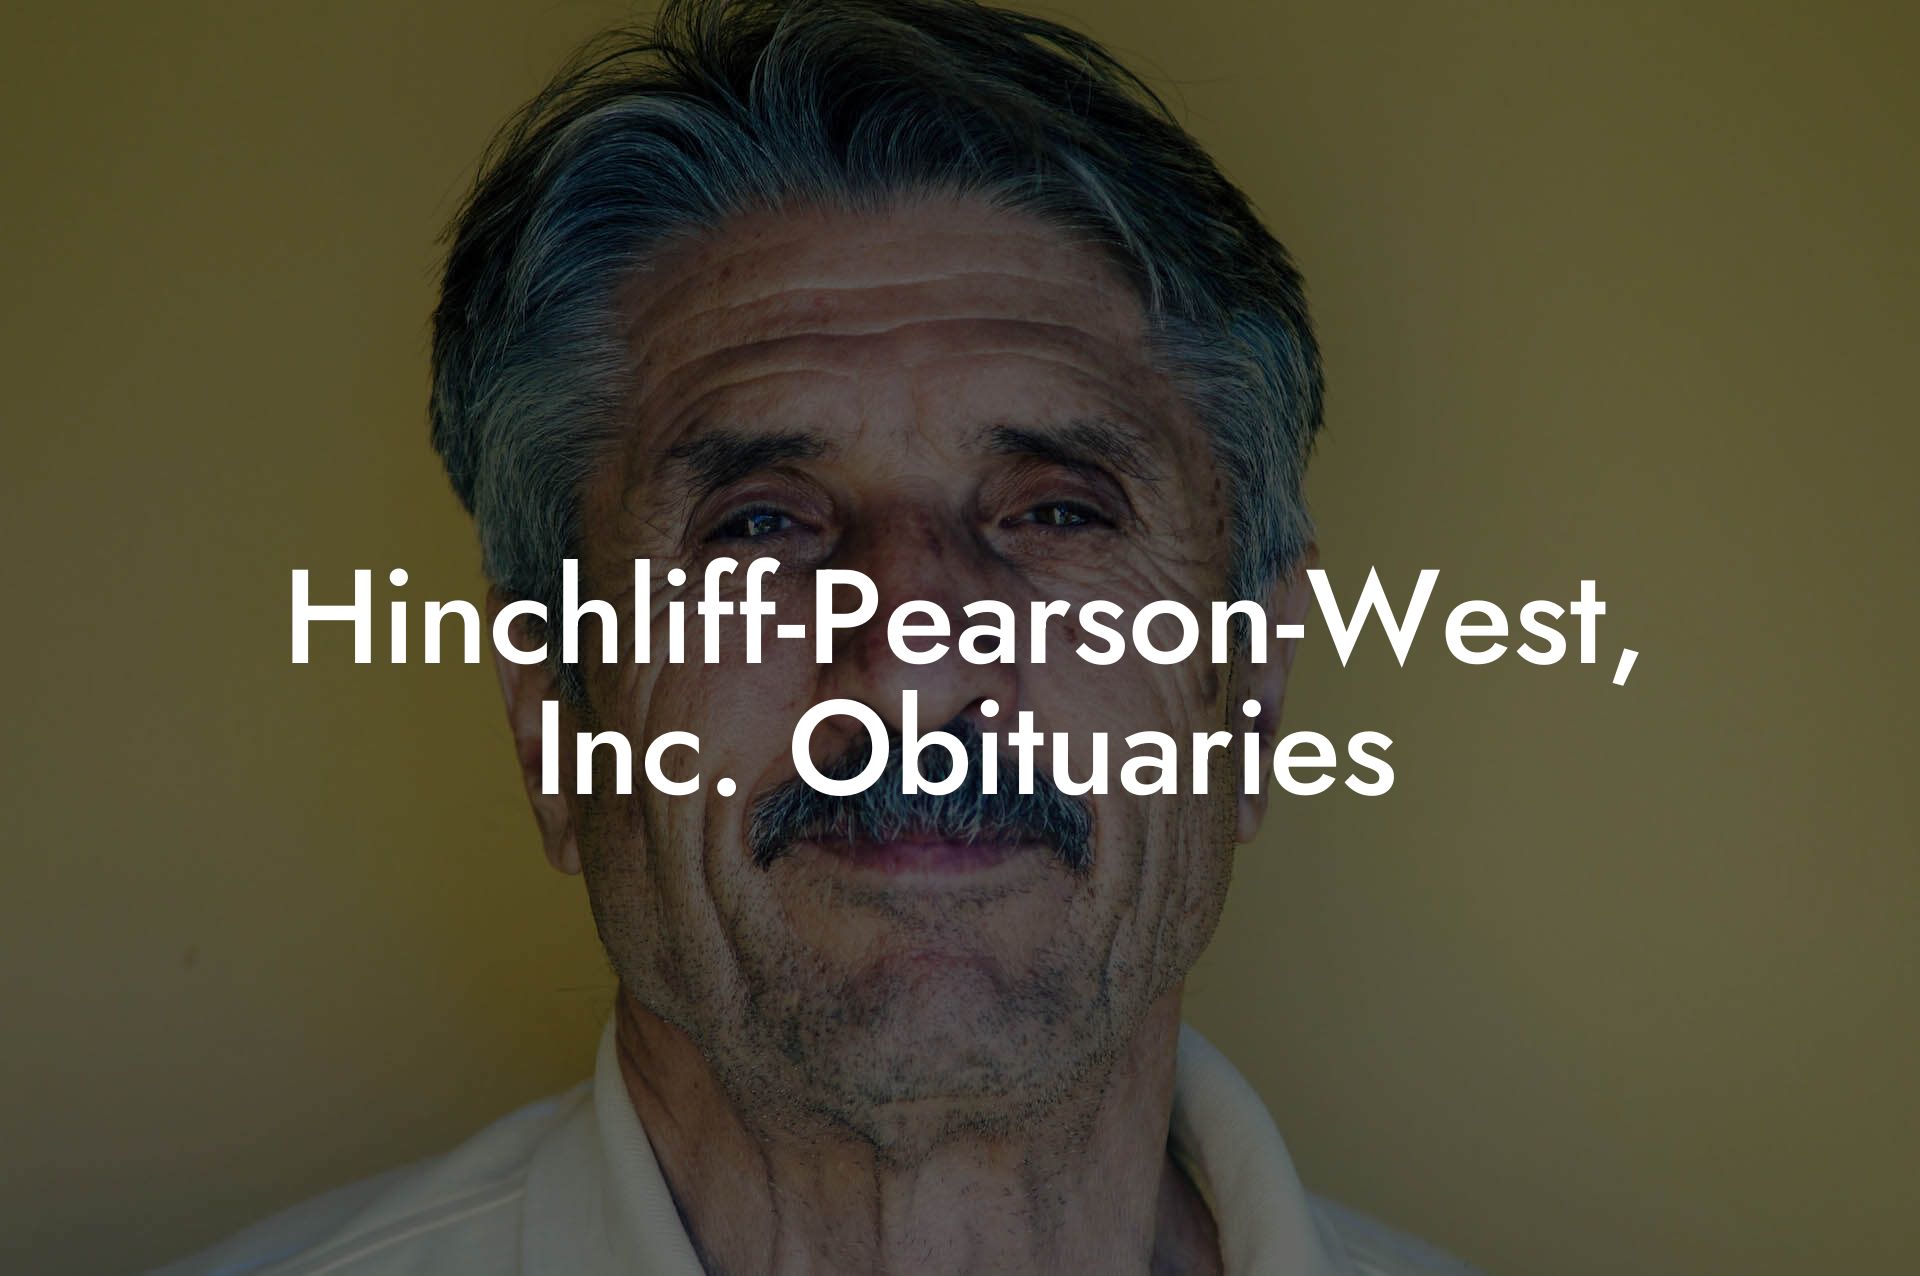 Hinchliff-Pearson-West, Inc Obituaries